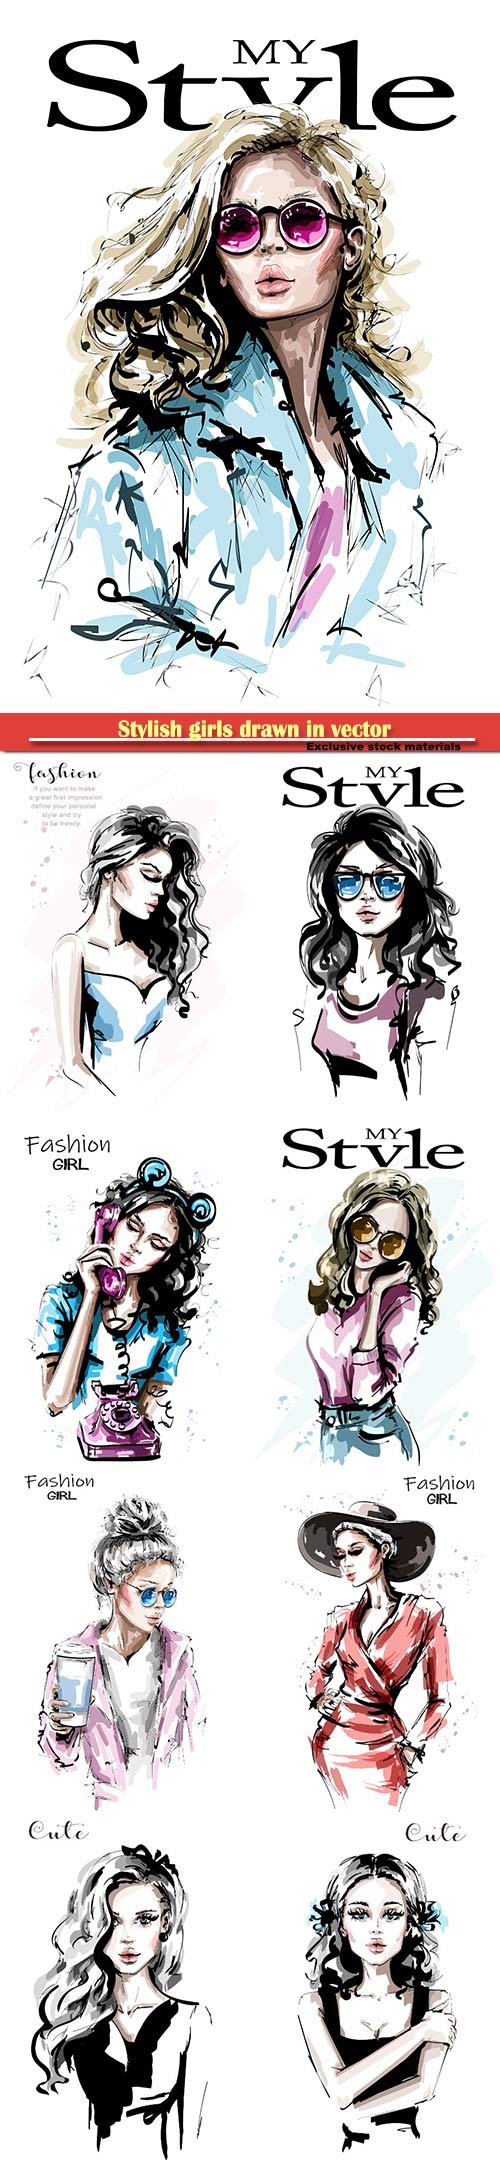 Stylish girls drawn in vector